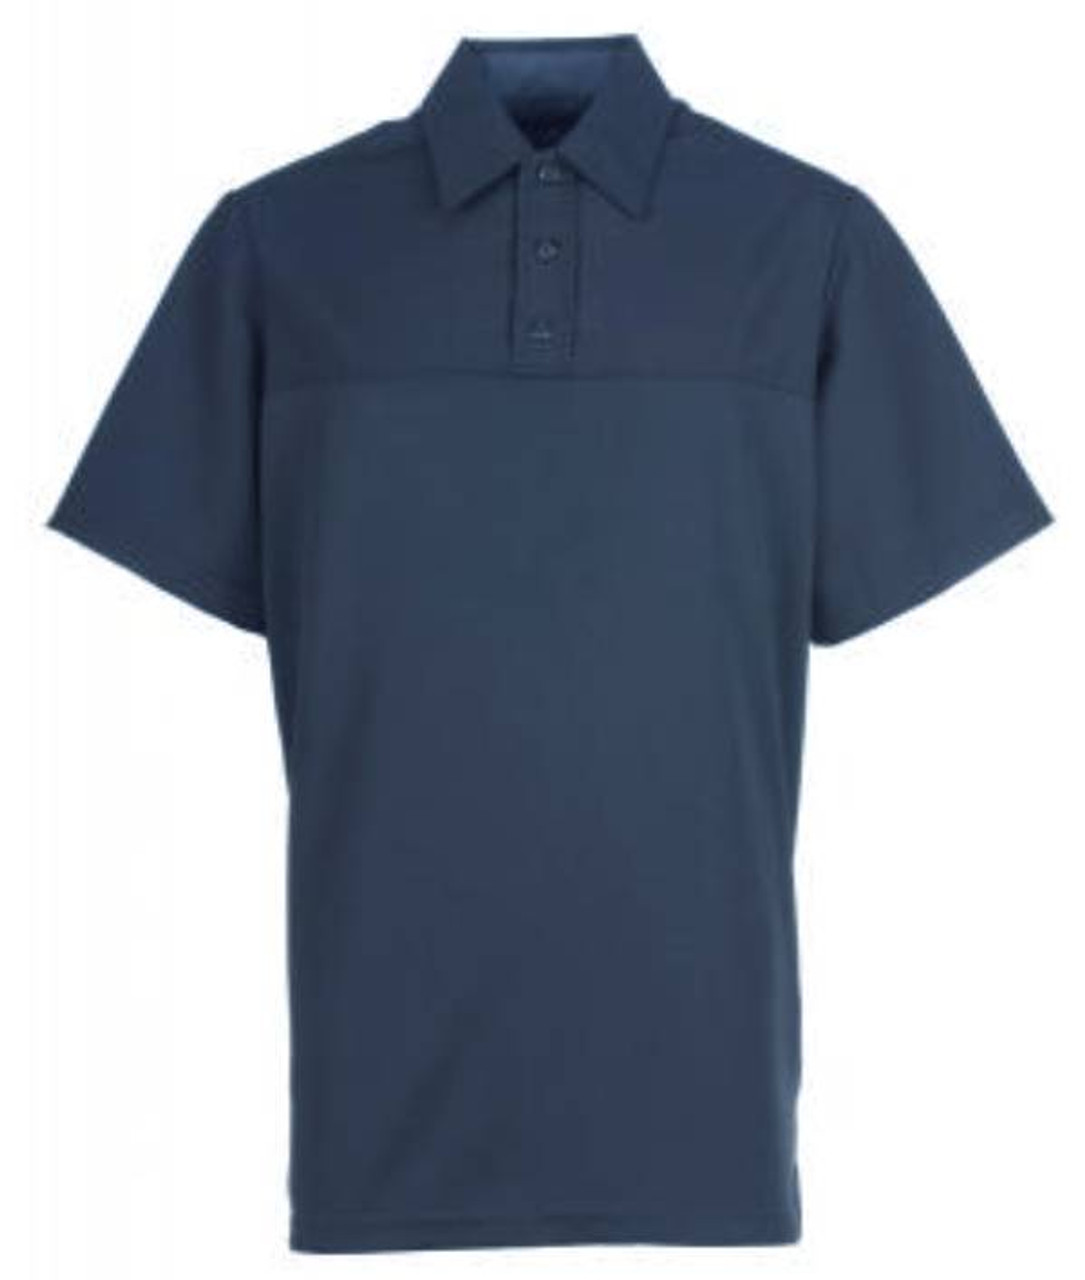 Spiewak SBLPP30 Professional Poly Short-Sleeve Base Layer Men's Polo, Uniform, Dark Navy Blue